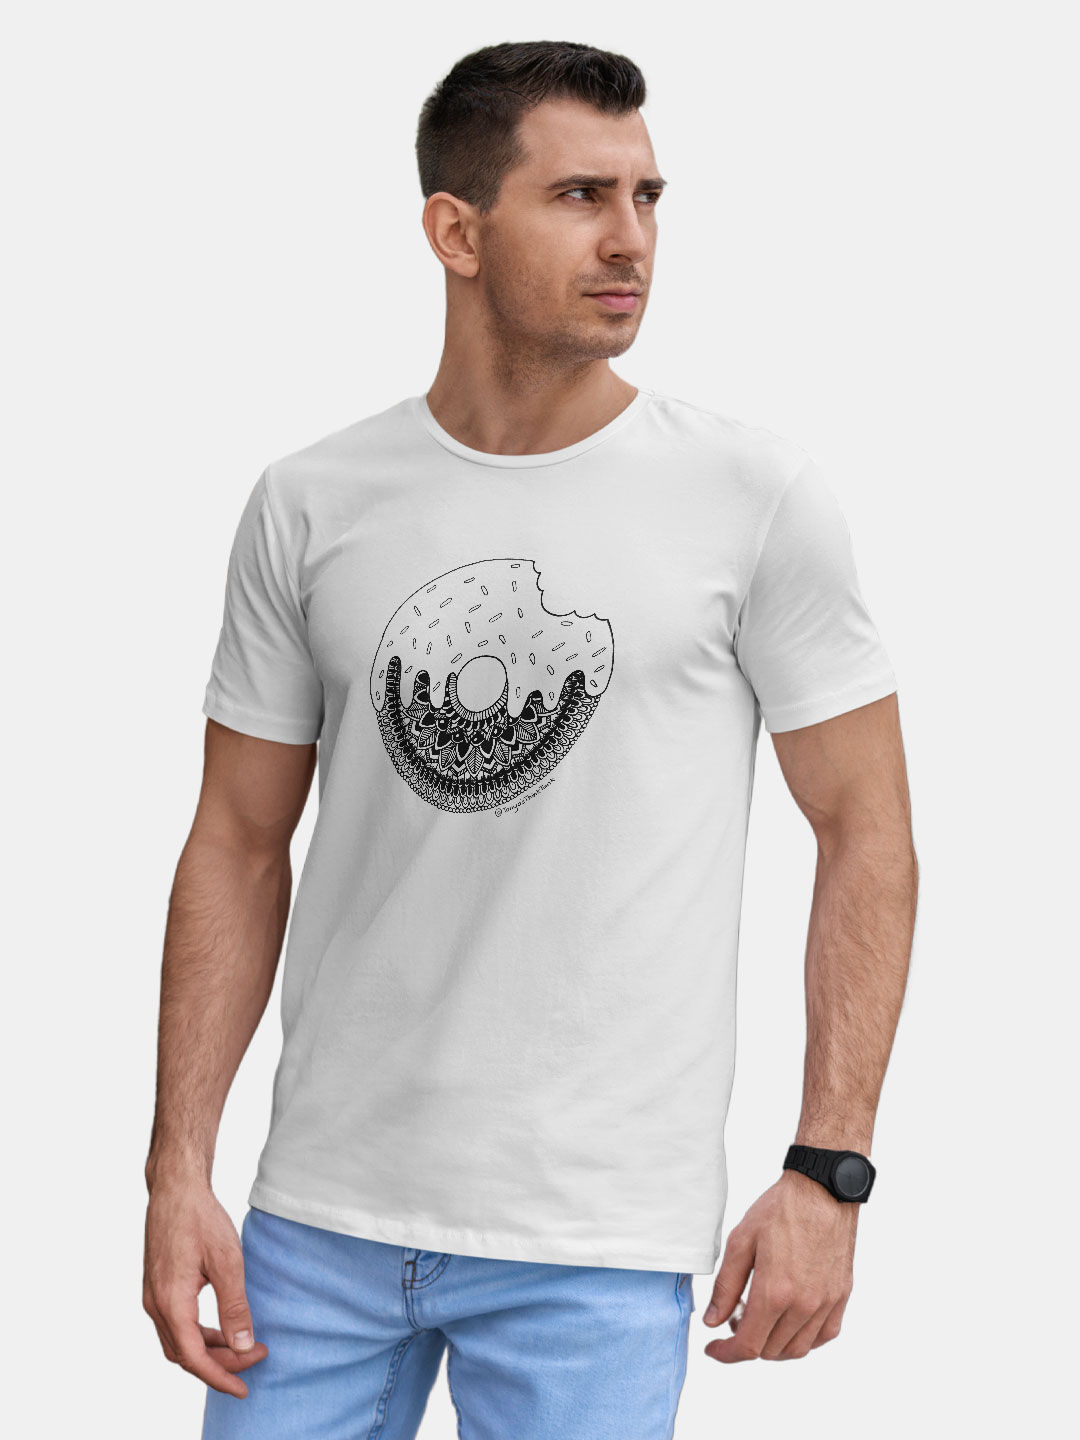 Buy Donut White - Male Designer T-Shirts T-Shirts Online